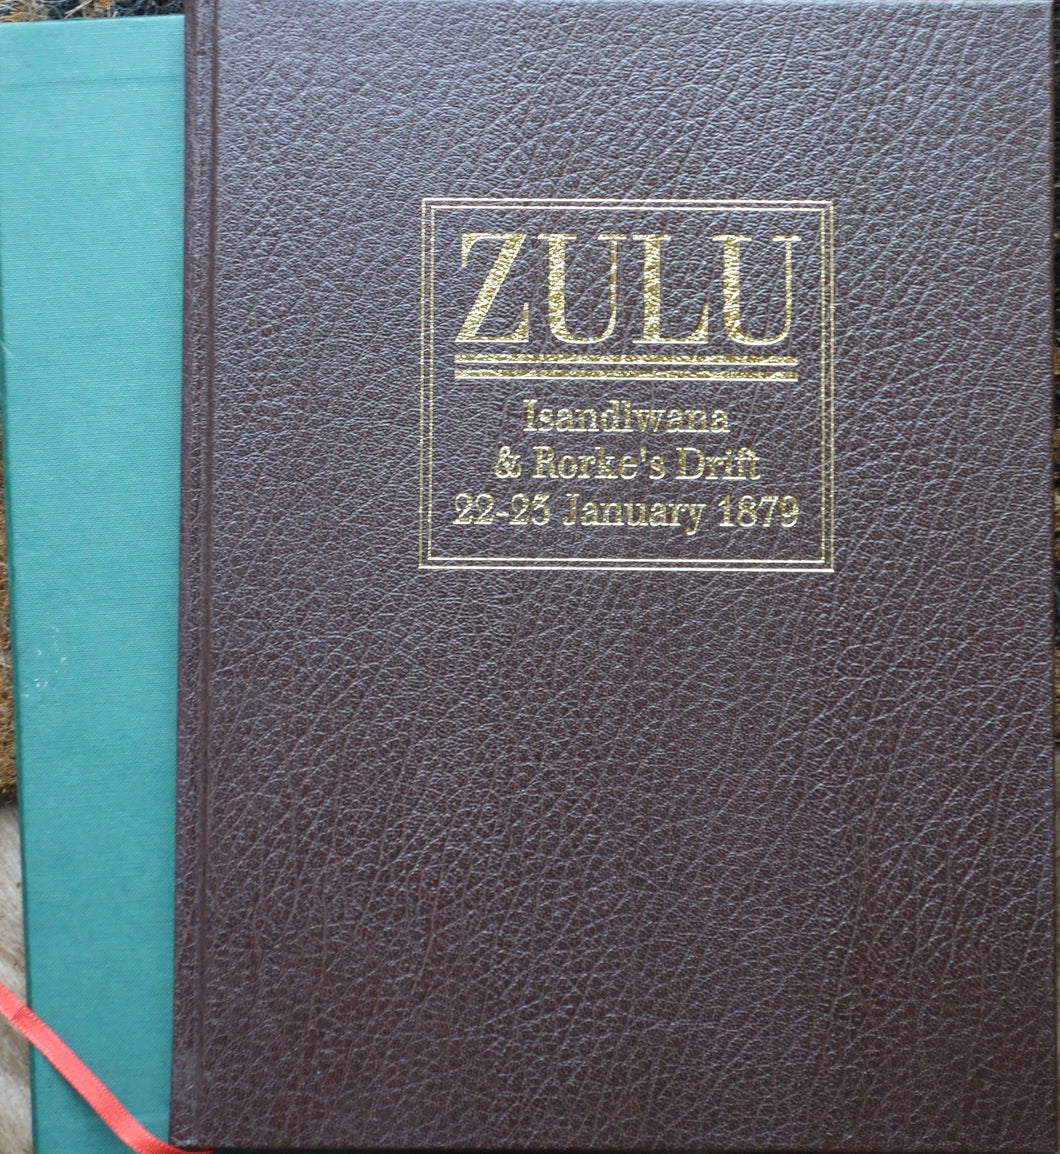 'ZULU; Isandlwana and Rorke's Drift 22-23 January 1879' LIMITED CASED EDITION SIGNED